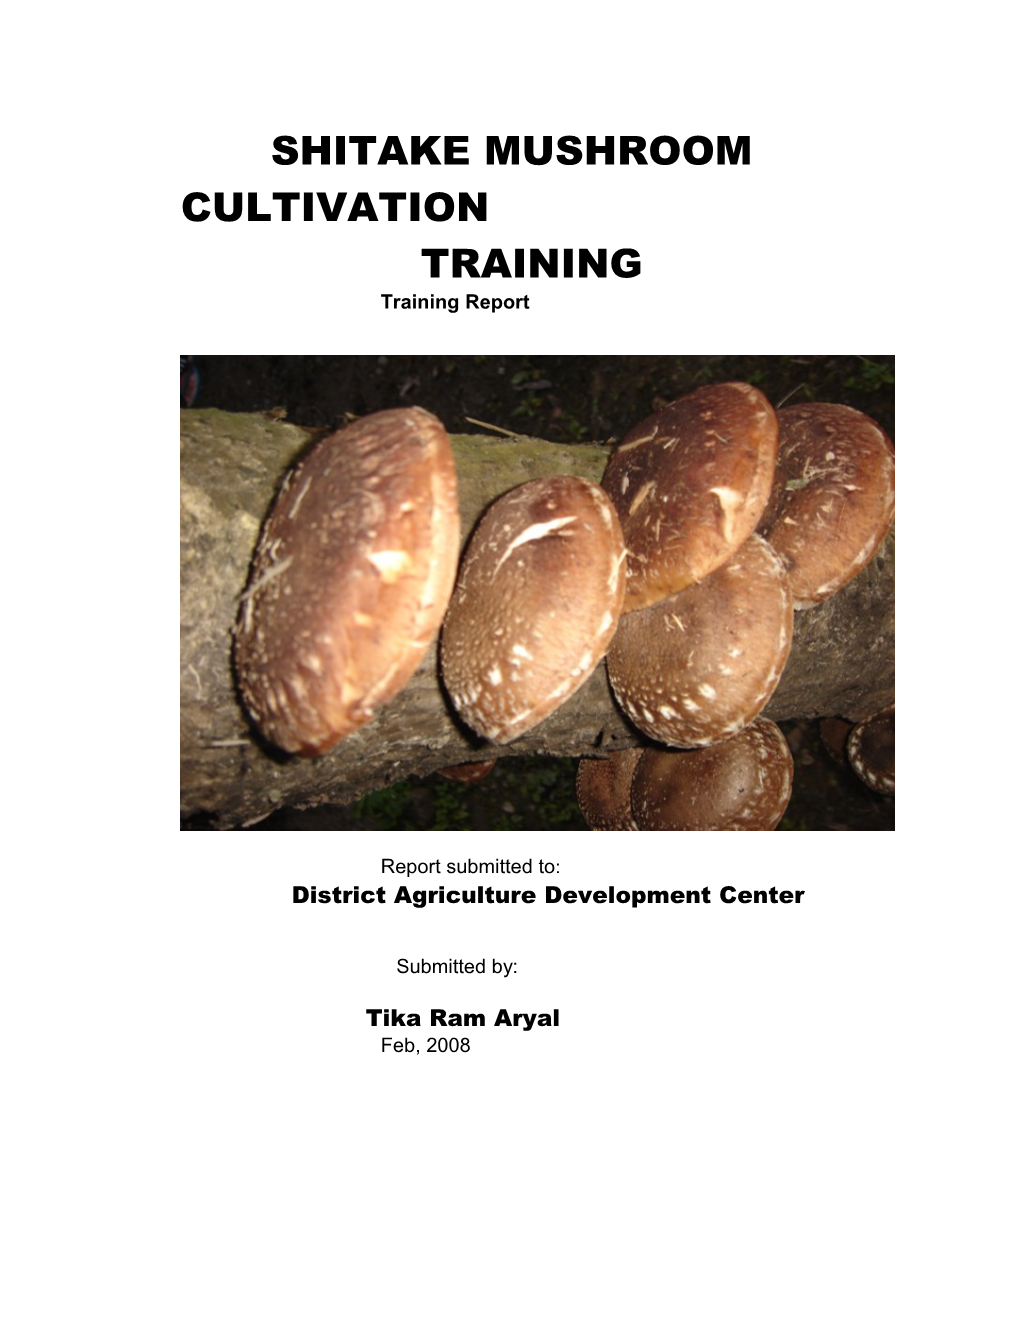 Shitake Mushroom Cultivation